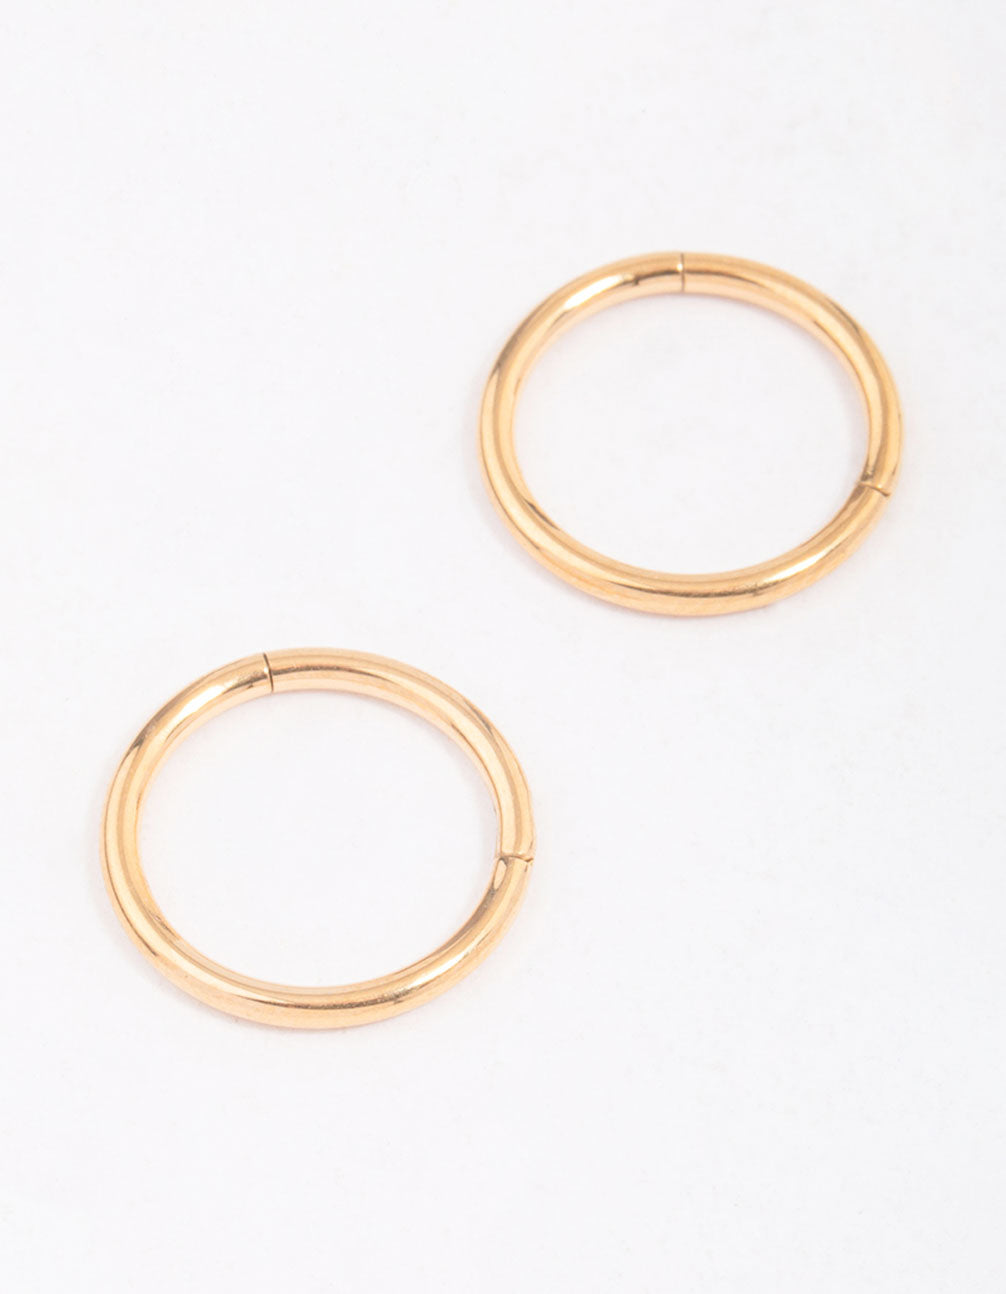 Hoop Earrings - Gold Plated with Crystals - Aztec Round Hoop Earrings by  Blingvine